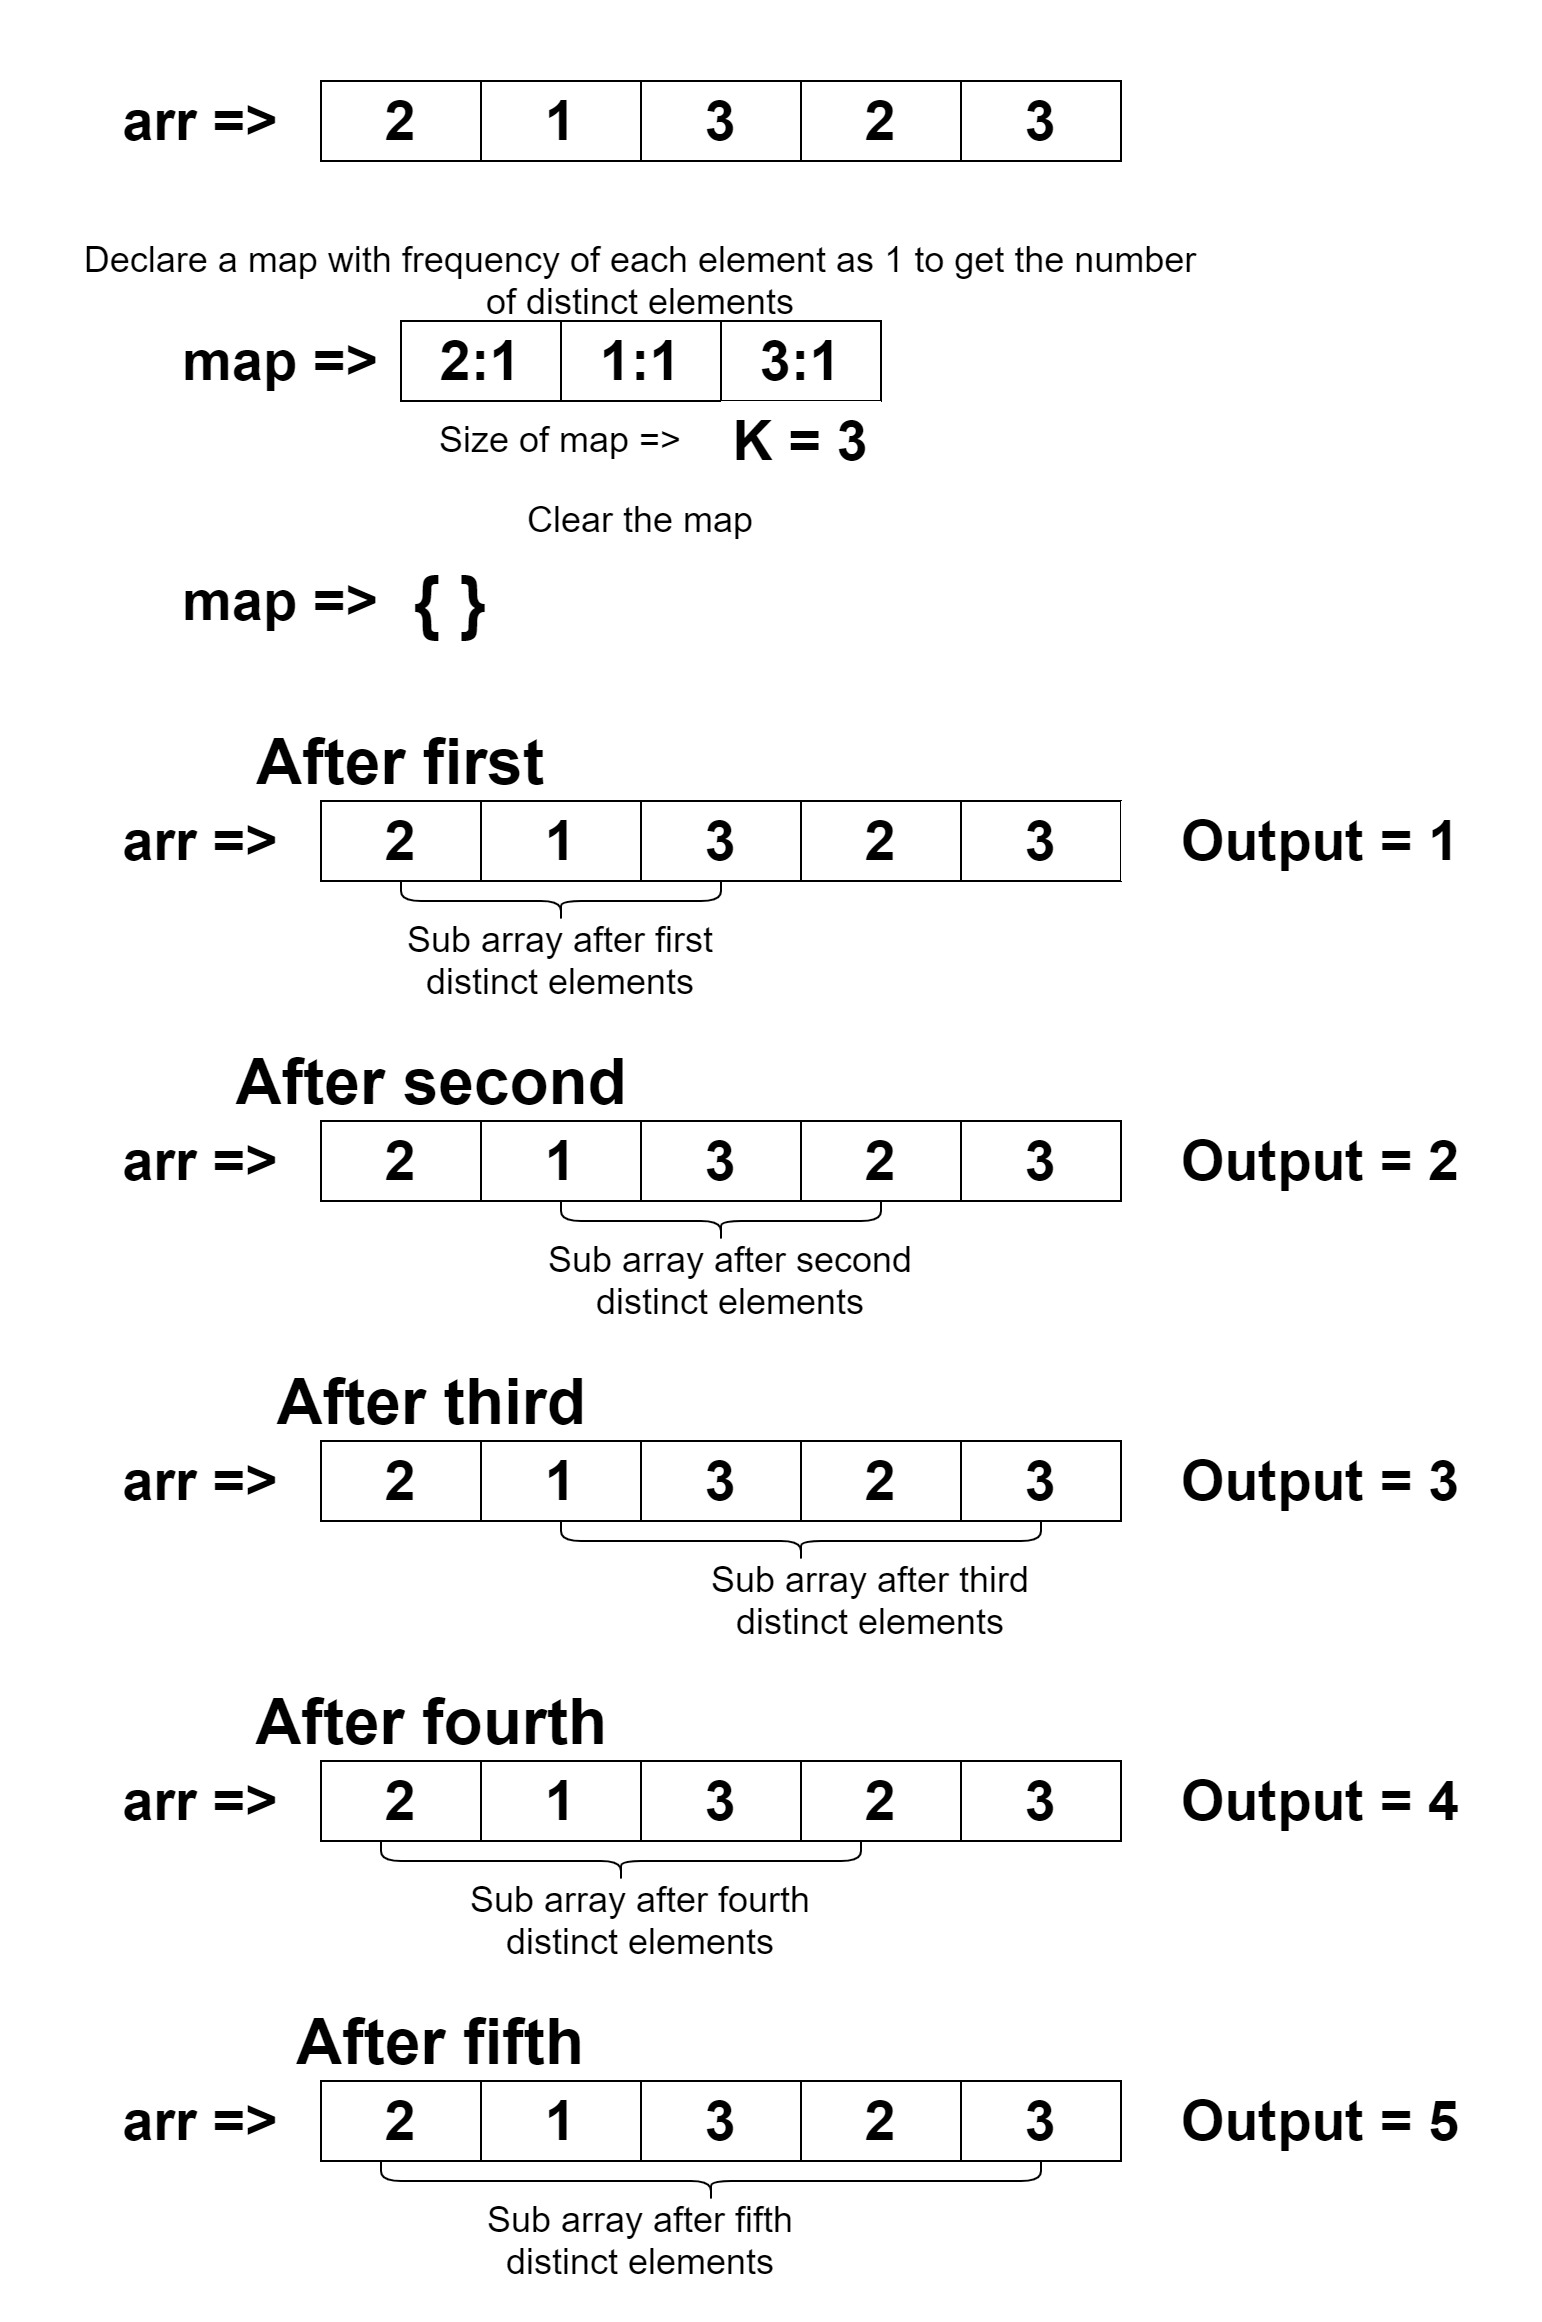 Count subarrays having total distinct elements same as original array